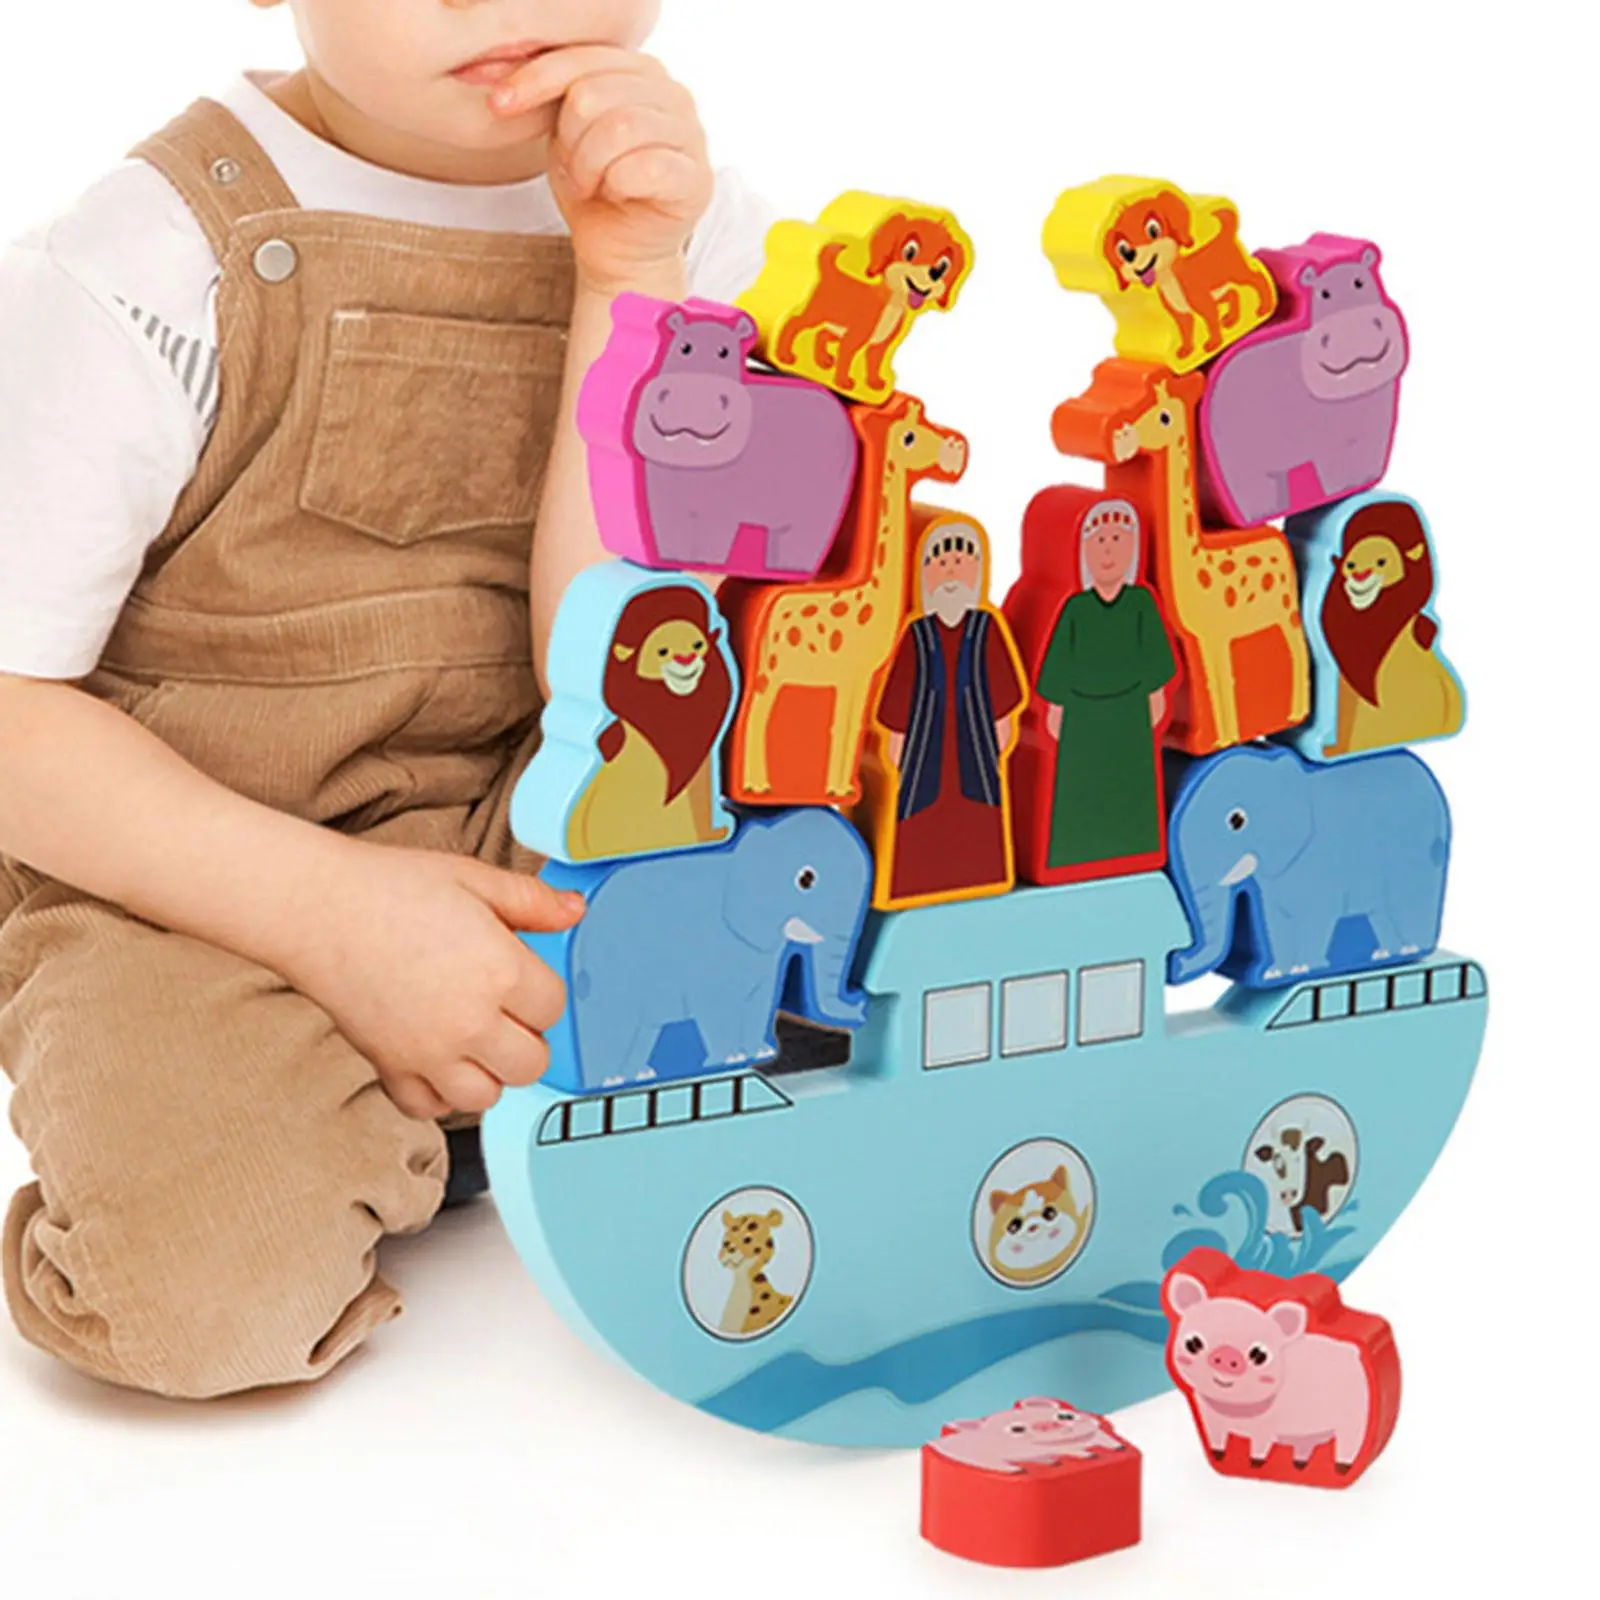 Game Balance Game Educational Toys Learning Building Toys Brain Development for Children Girls Boys Kids Toddler Gifts